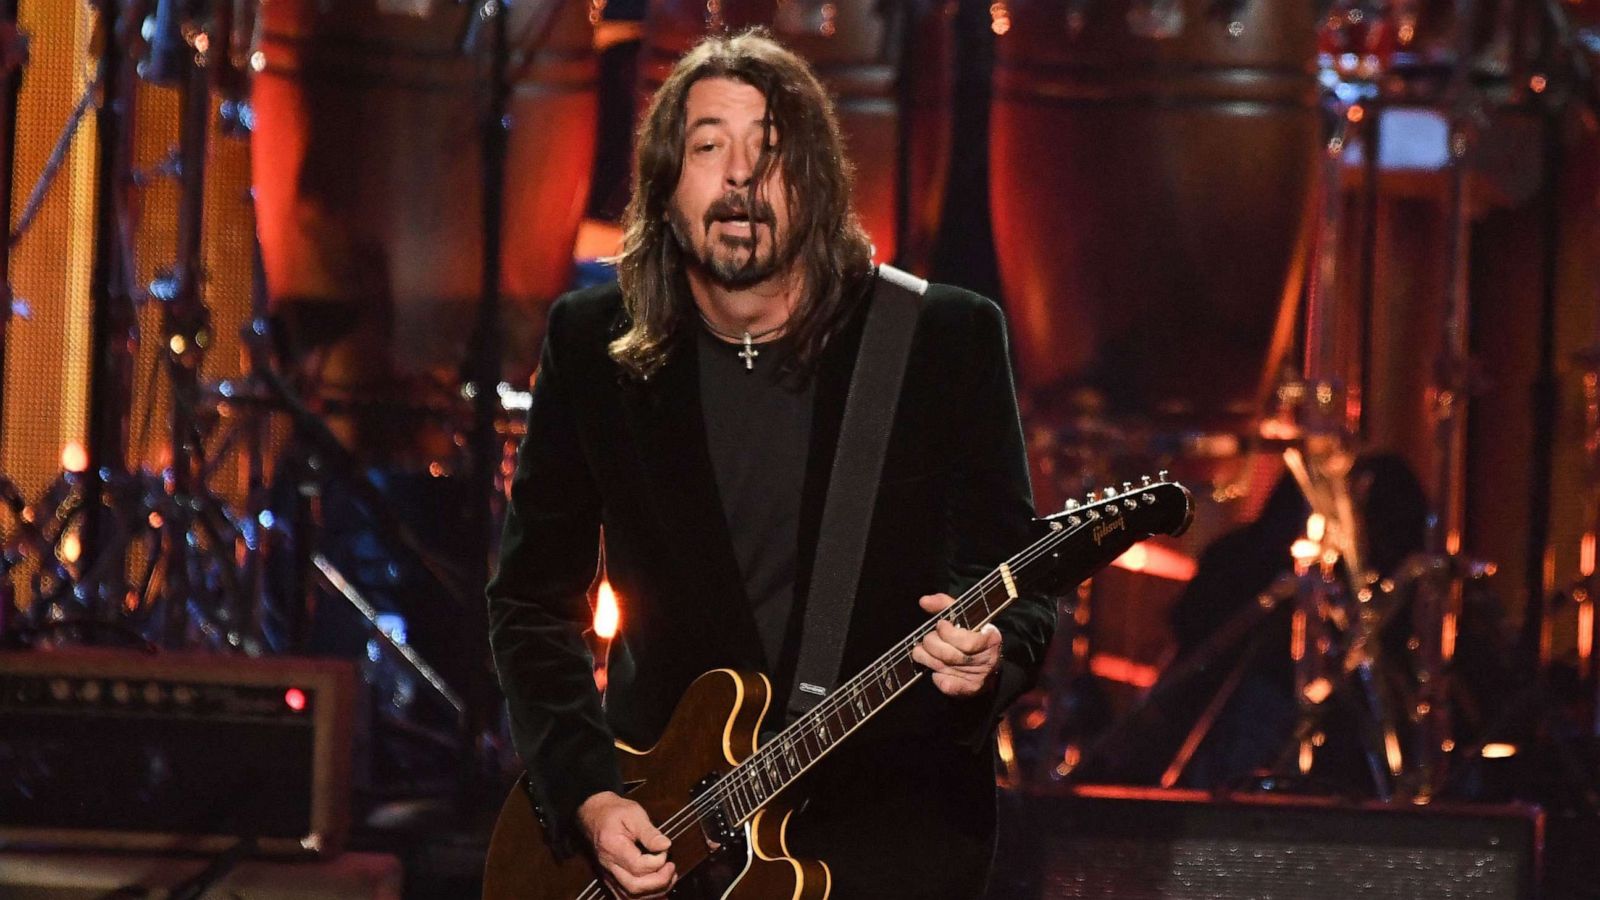 Os 5 momentos mais marcantes de shows do Foo Fighters no Brasil